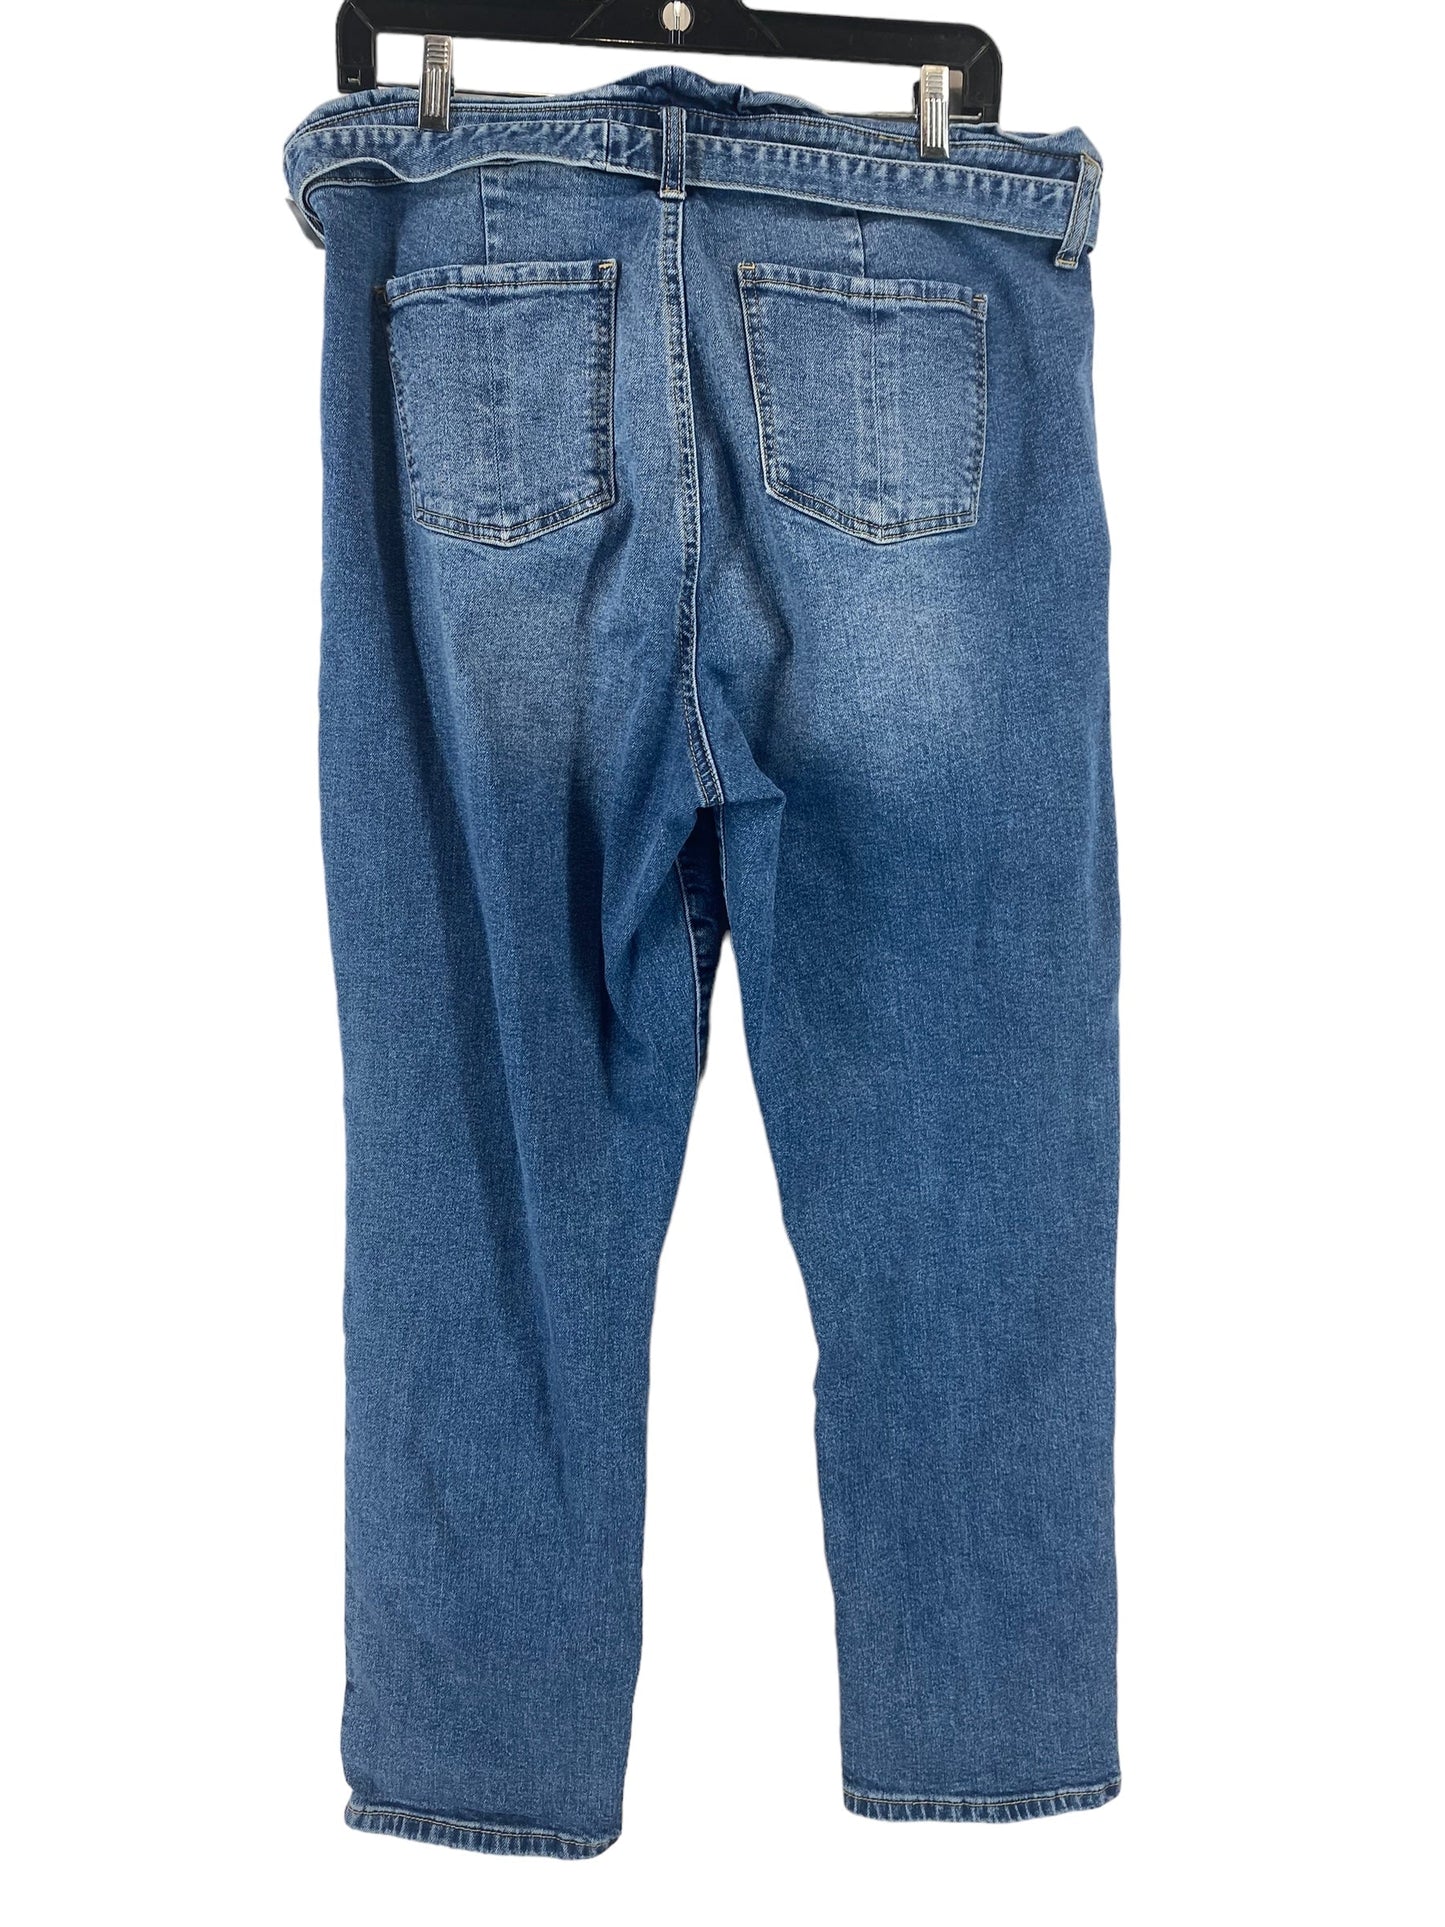 Blue Denim Jeans Straight Clothes Mentor, Size 32